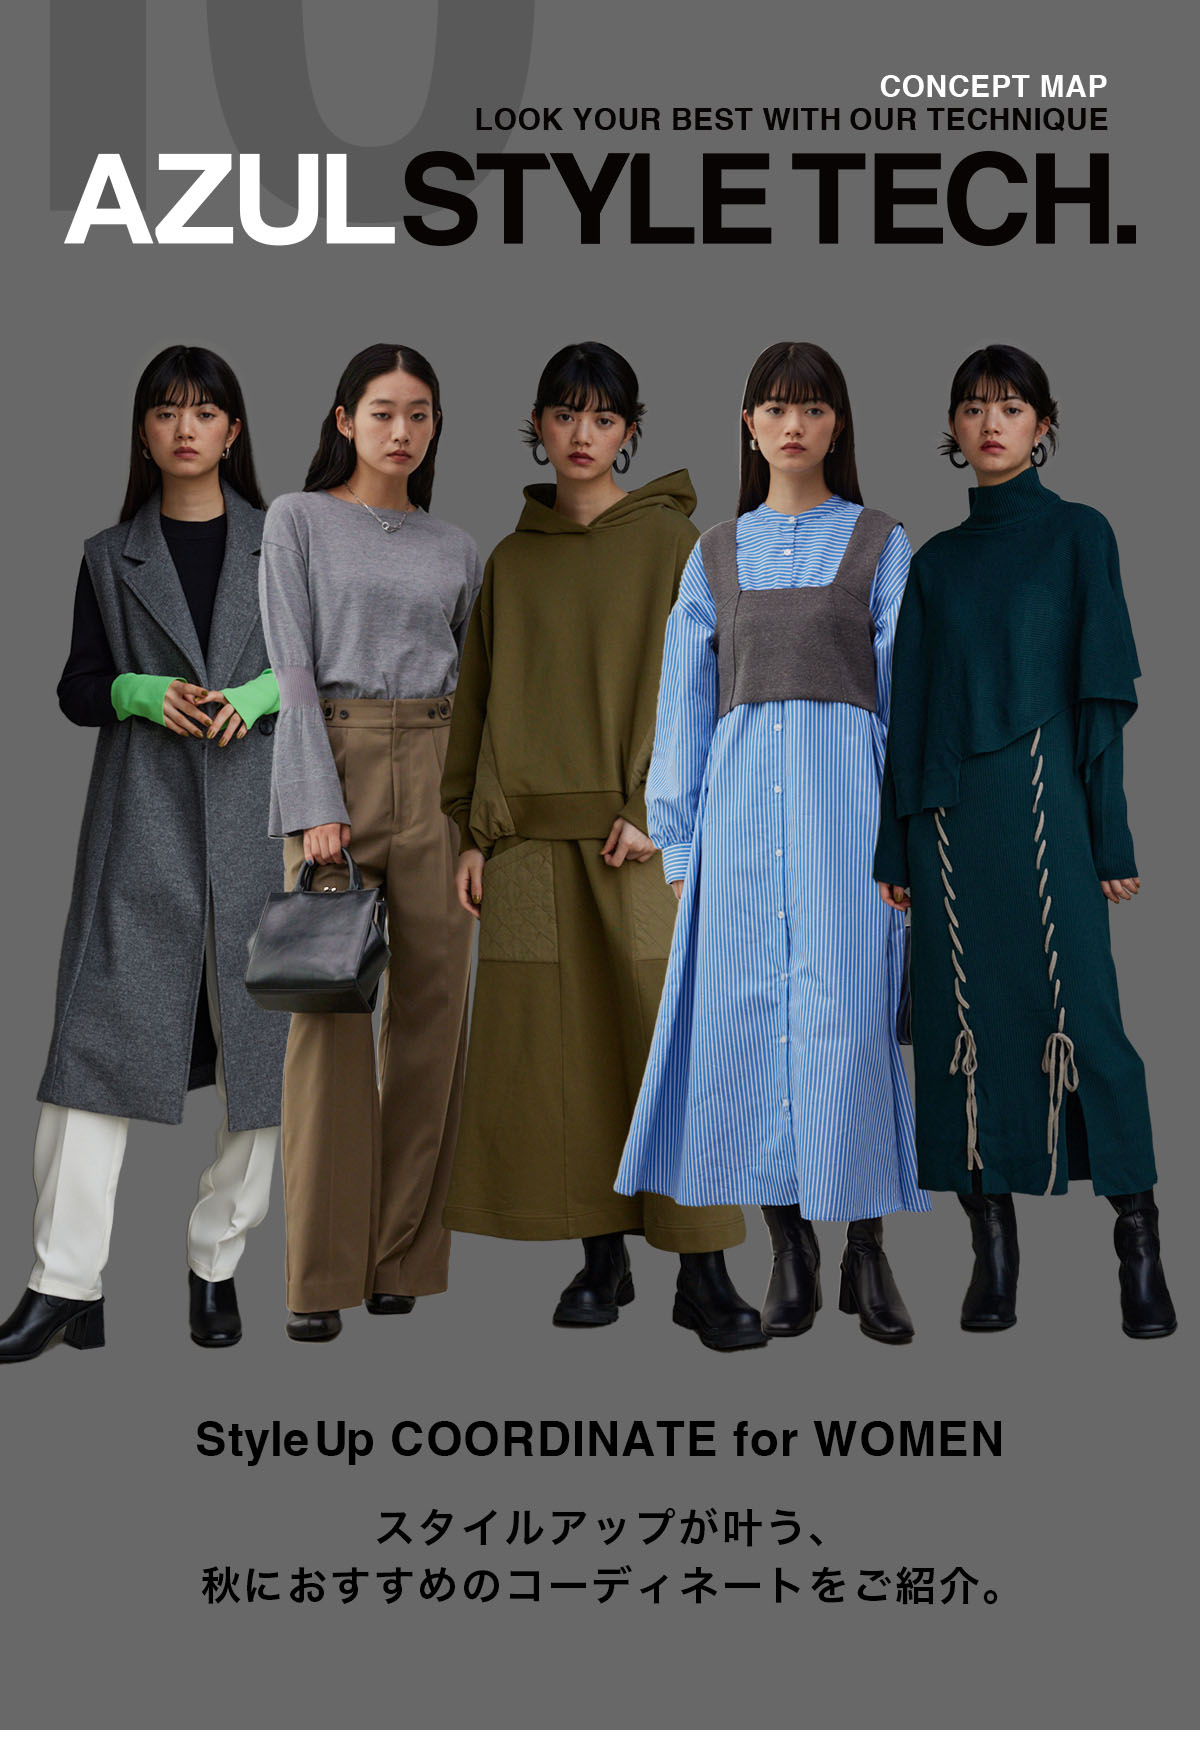 StyleUp COORDINATE for WOMEN スタイルアップが叶う、秋におすすめのWOMENコーディネートをご紹介。